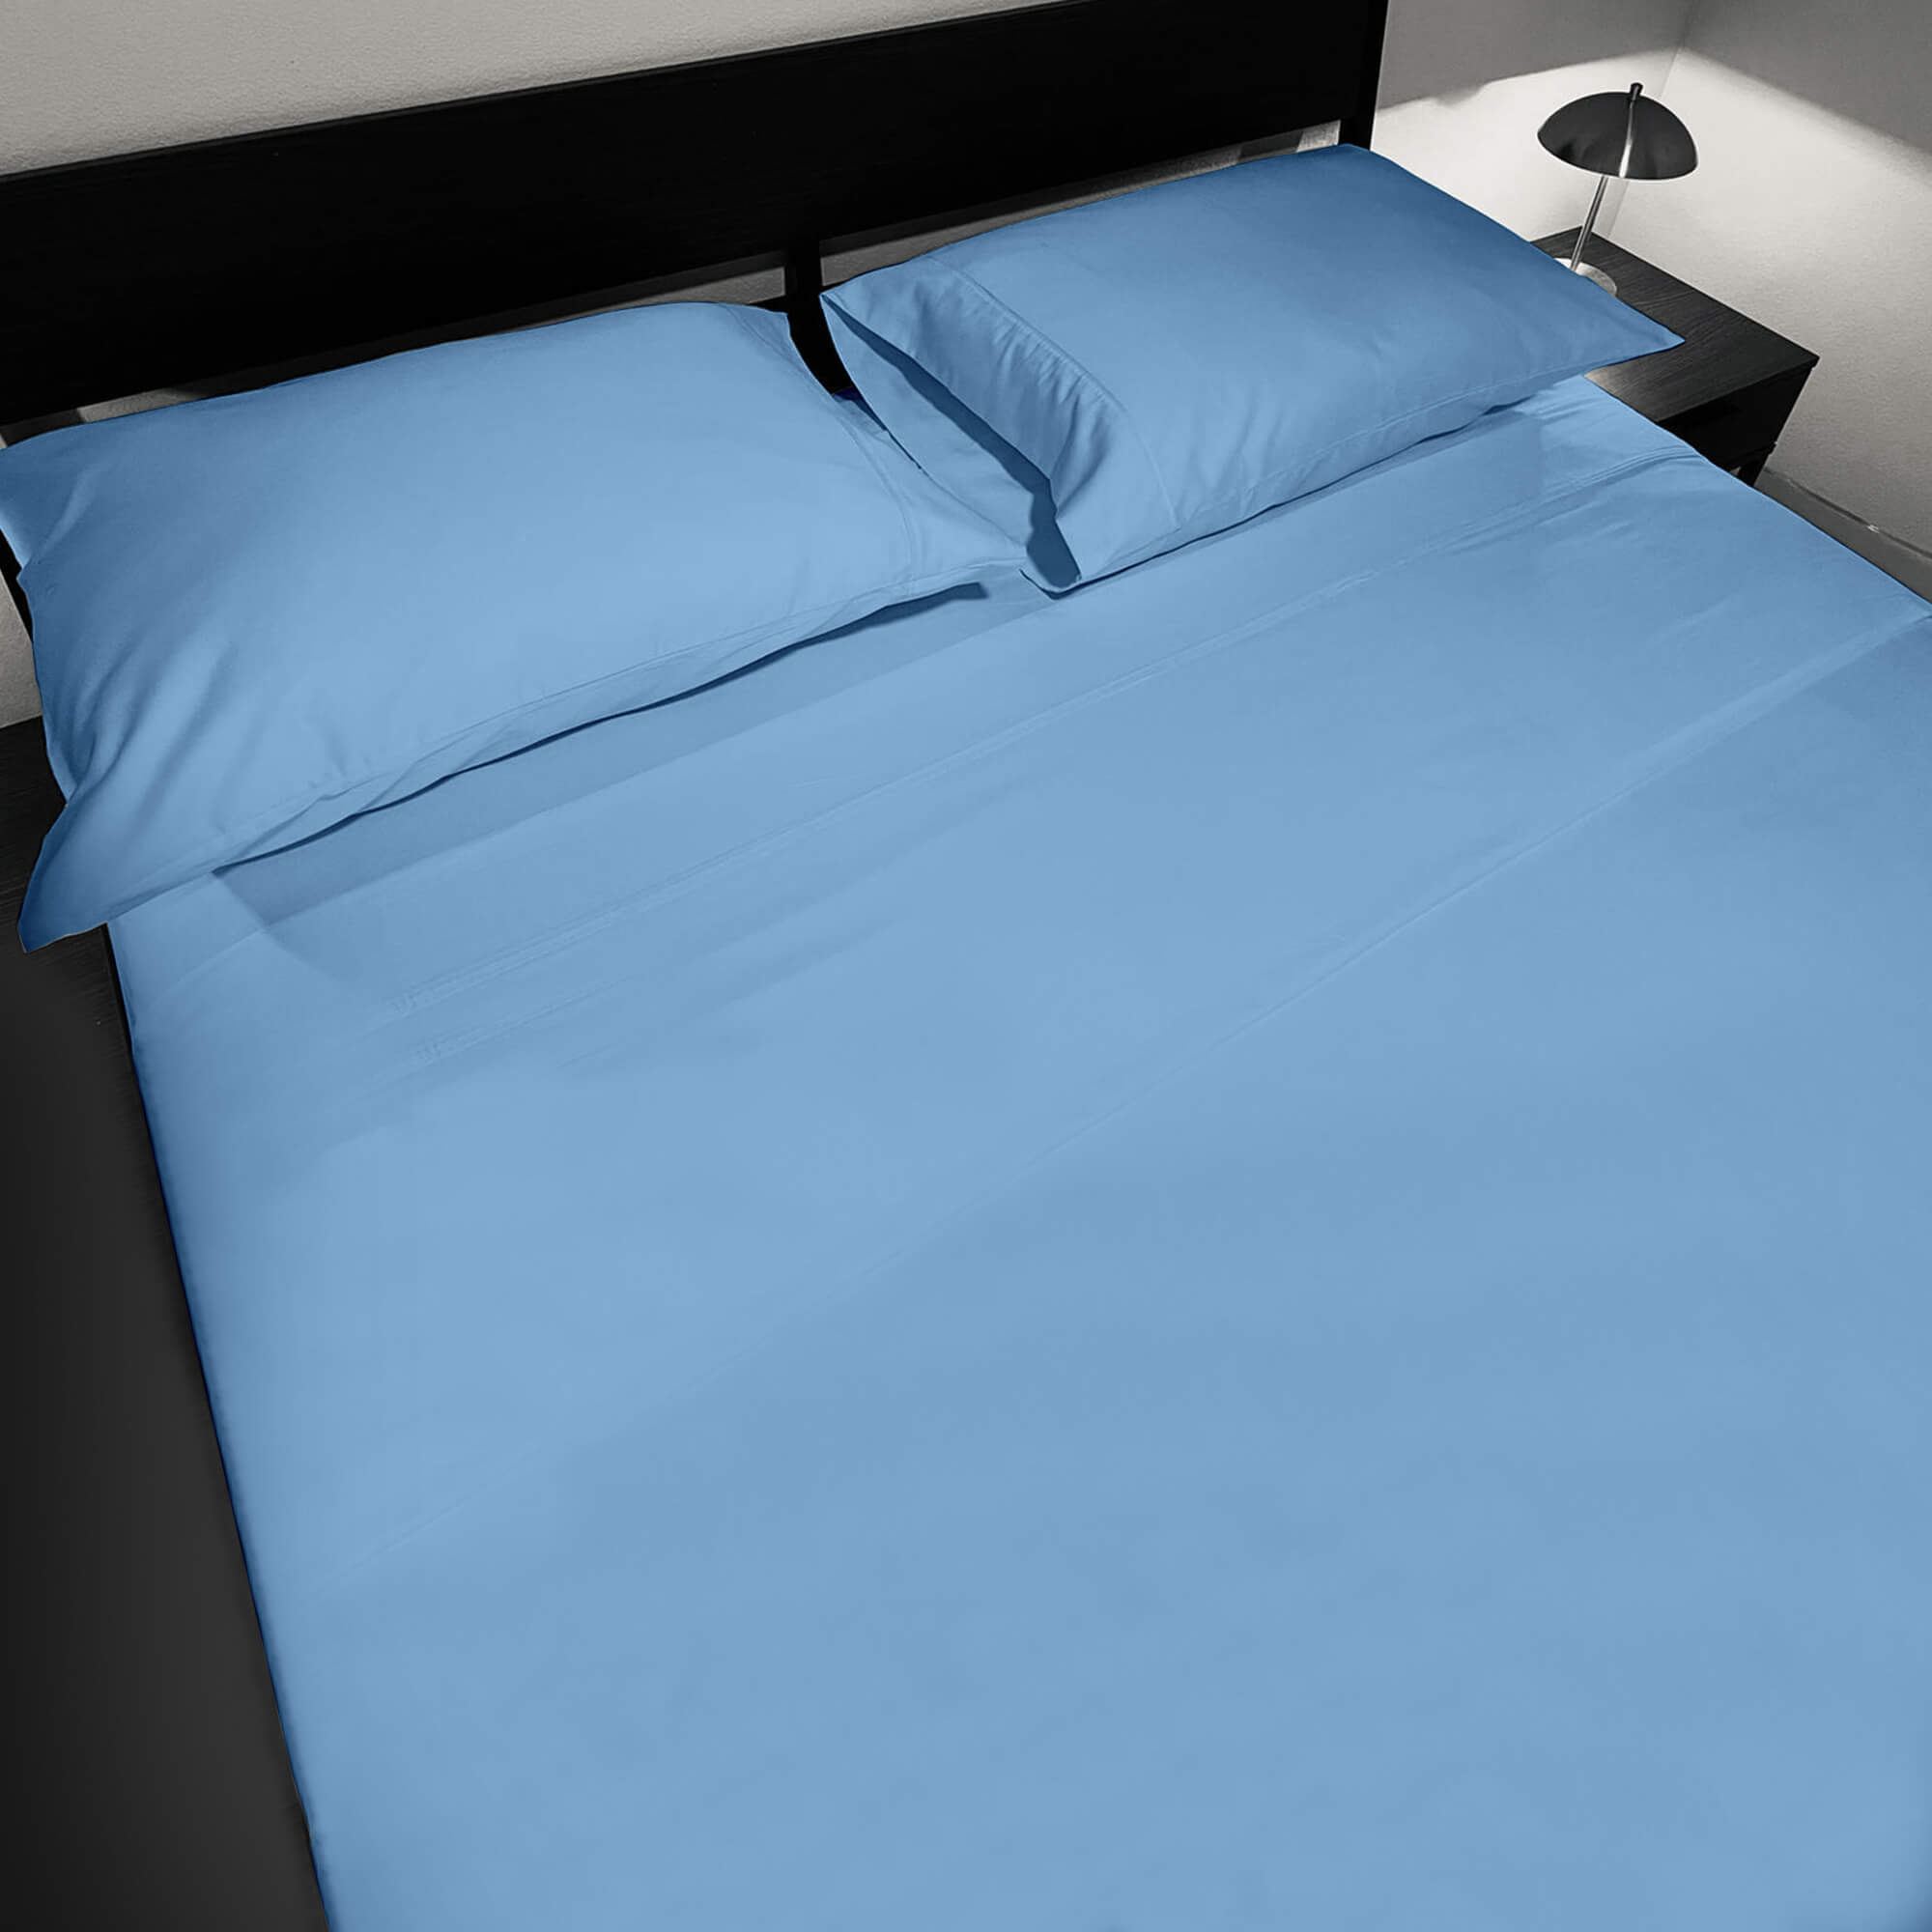 Bassetti bedsheet with angles sganciabili Perfect 100% Cotton Single NEW 